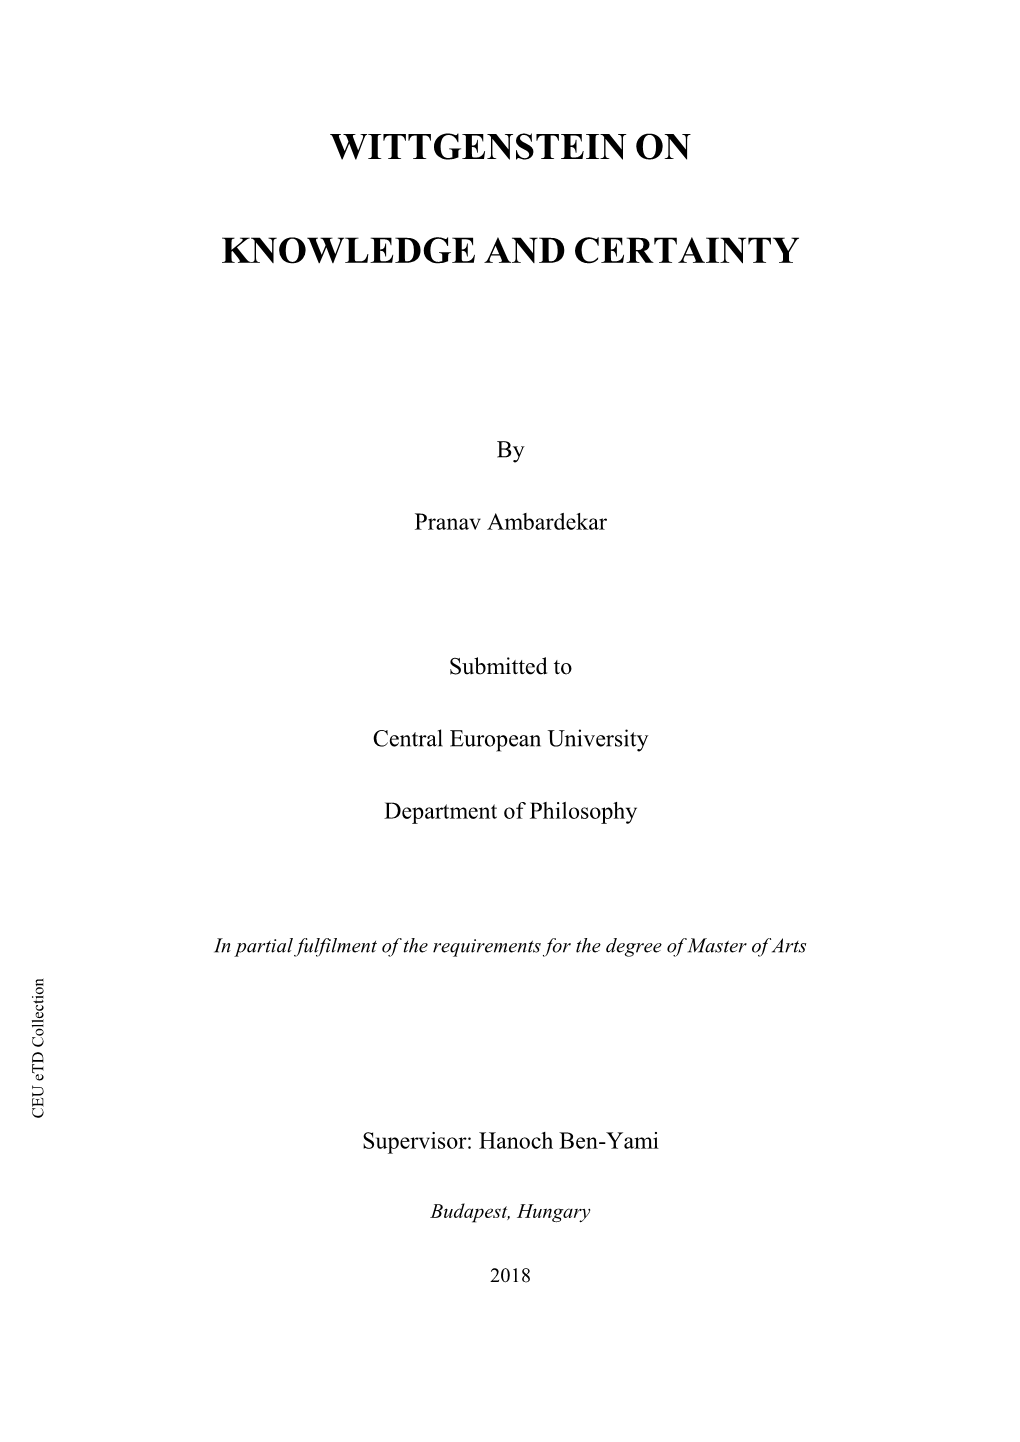 Wittgenstein on Knowledge and Certainty